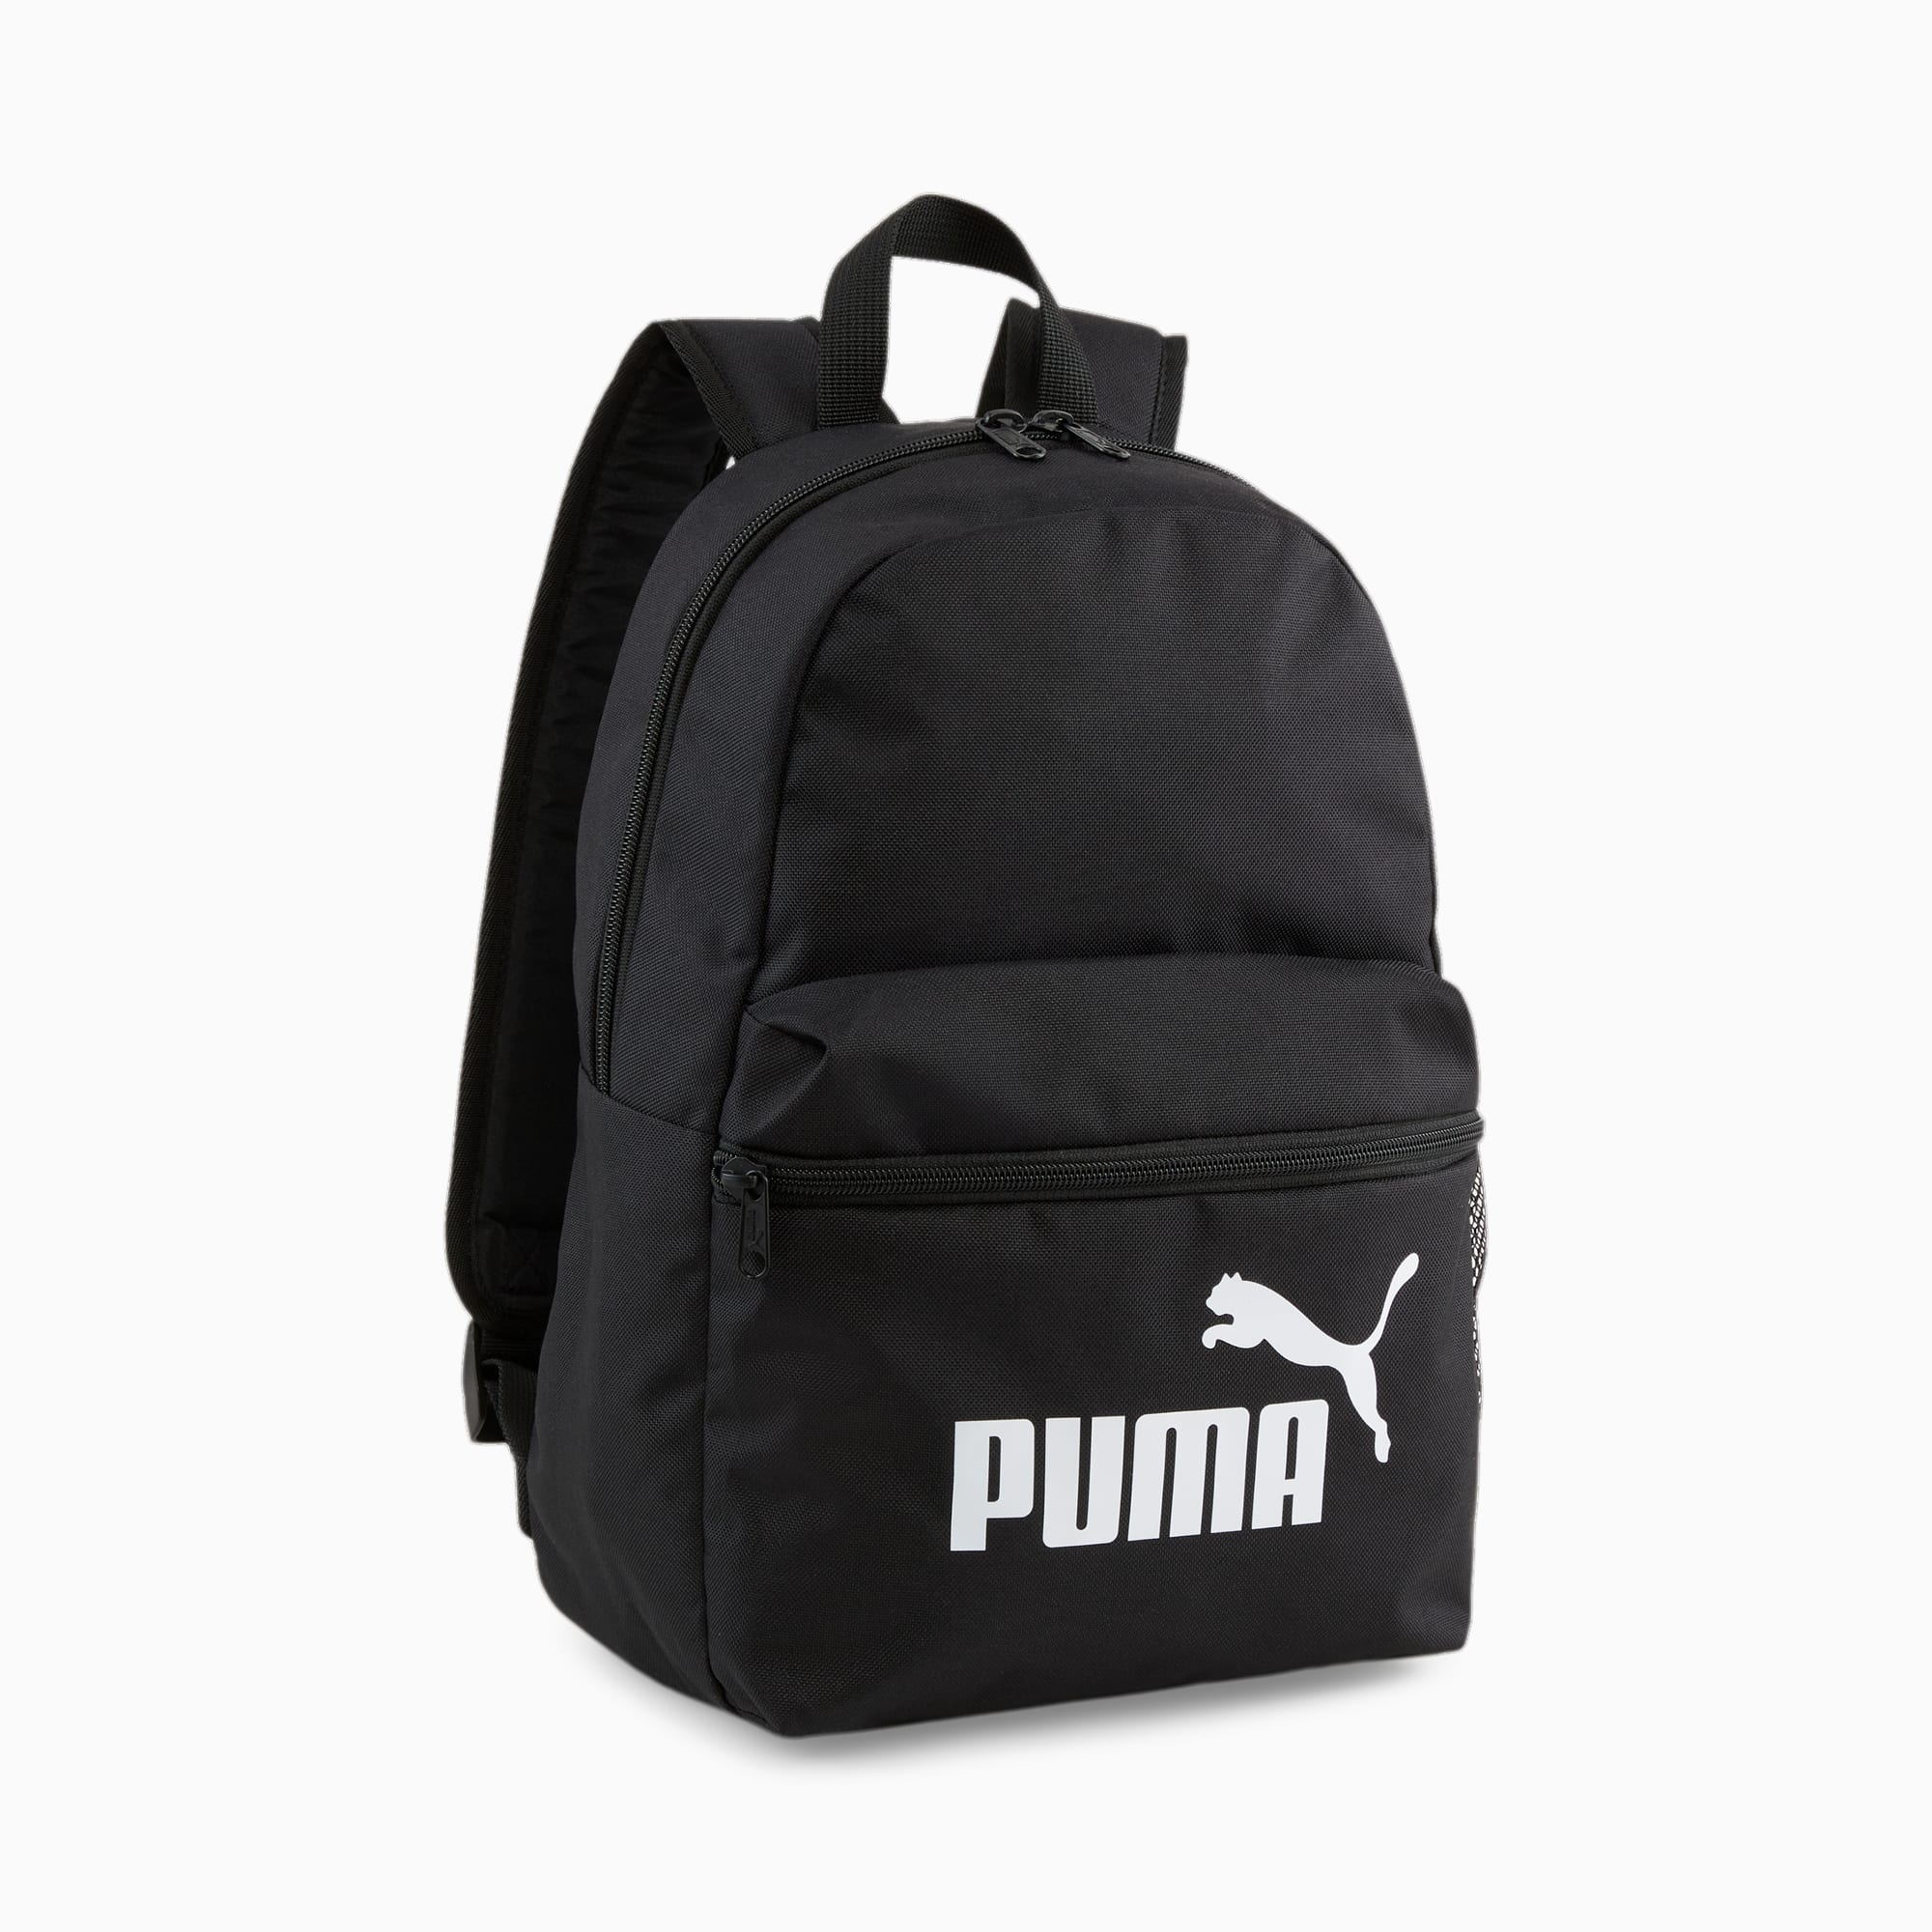 PUMA Phase Small Backpack | PUMA Black | PUMA Shop All Puma | PUMA